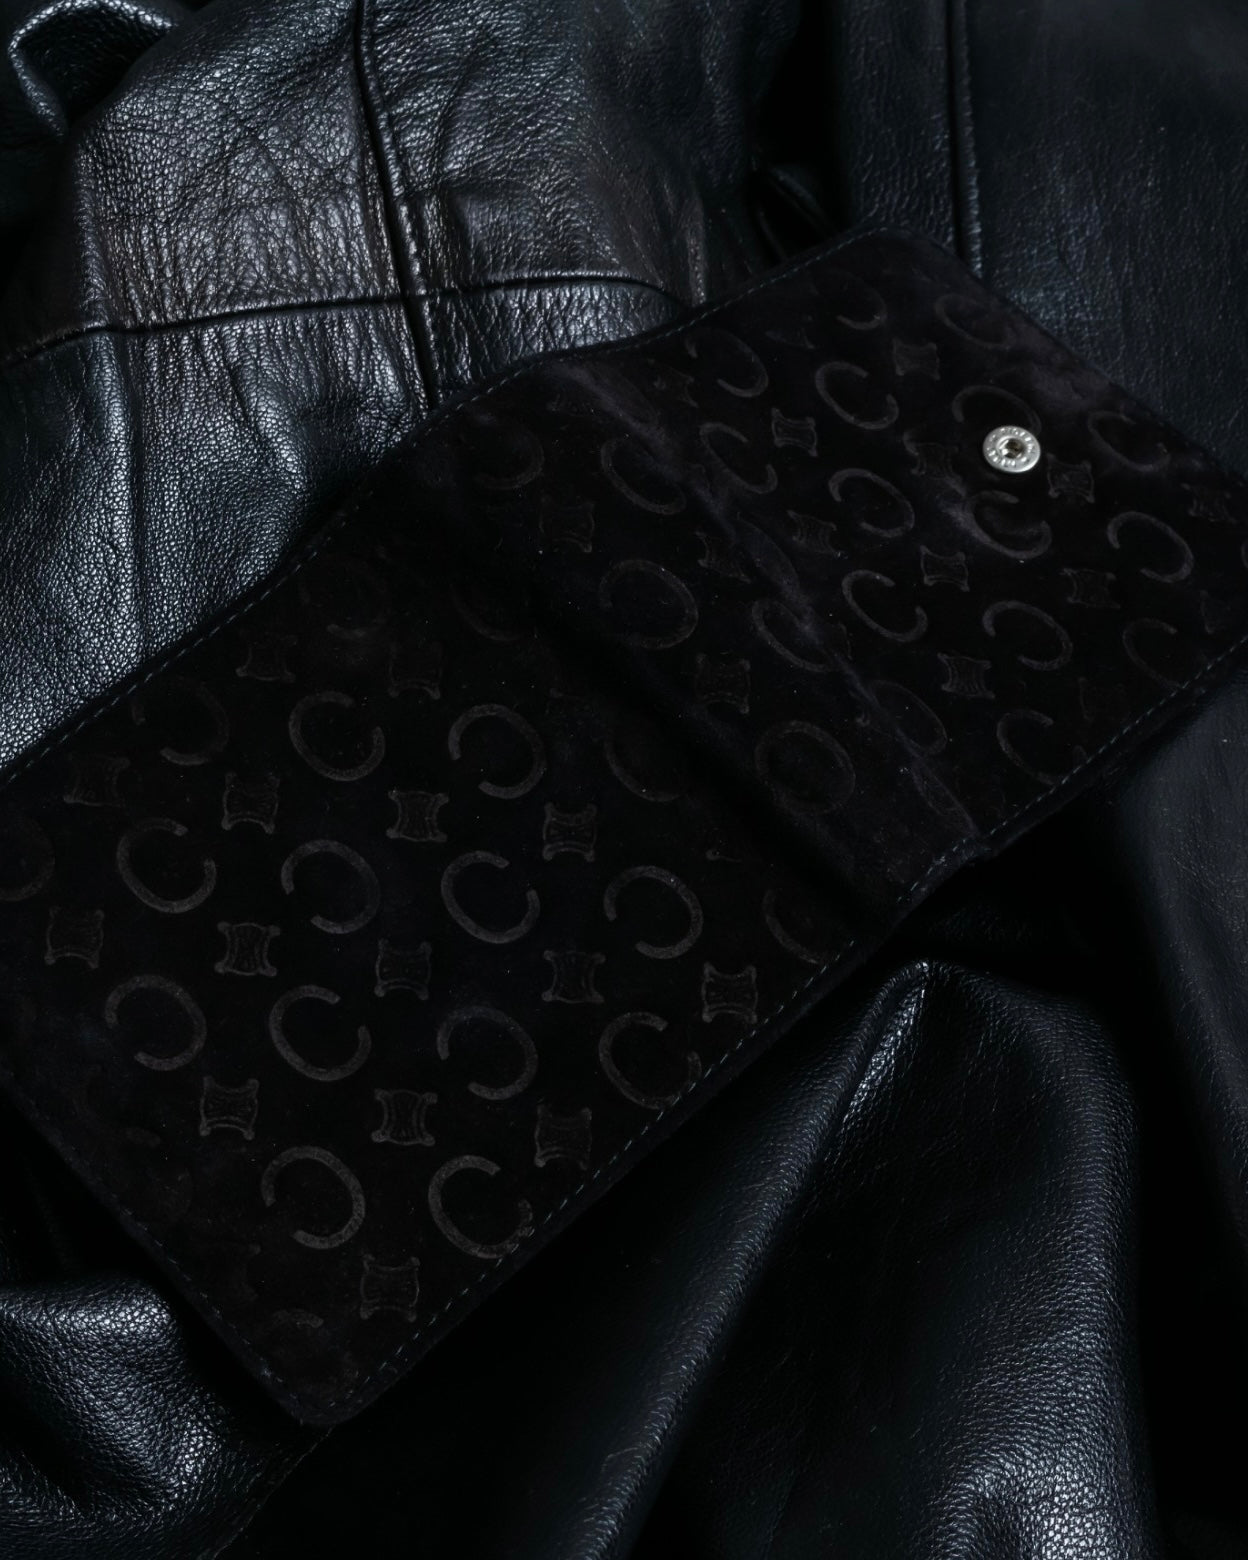 "CELINE" Leather wallet